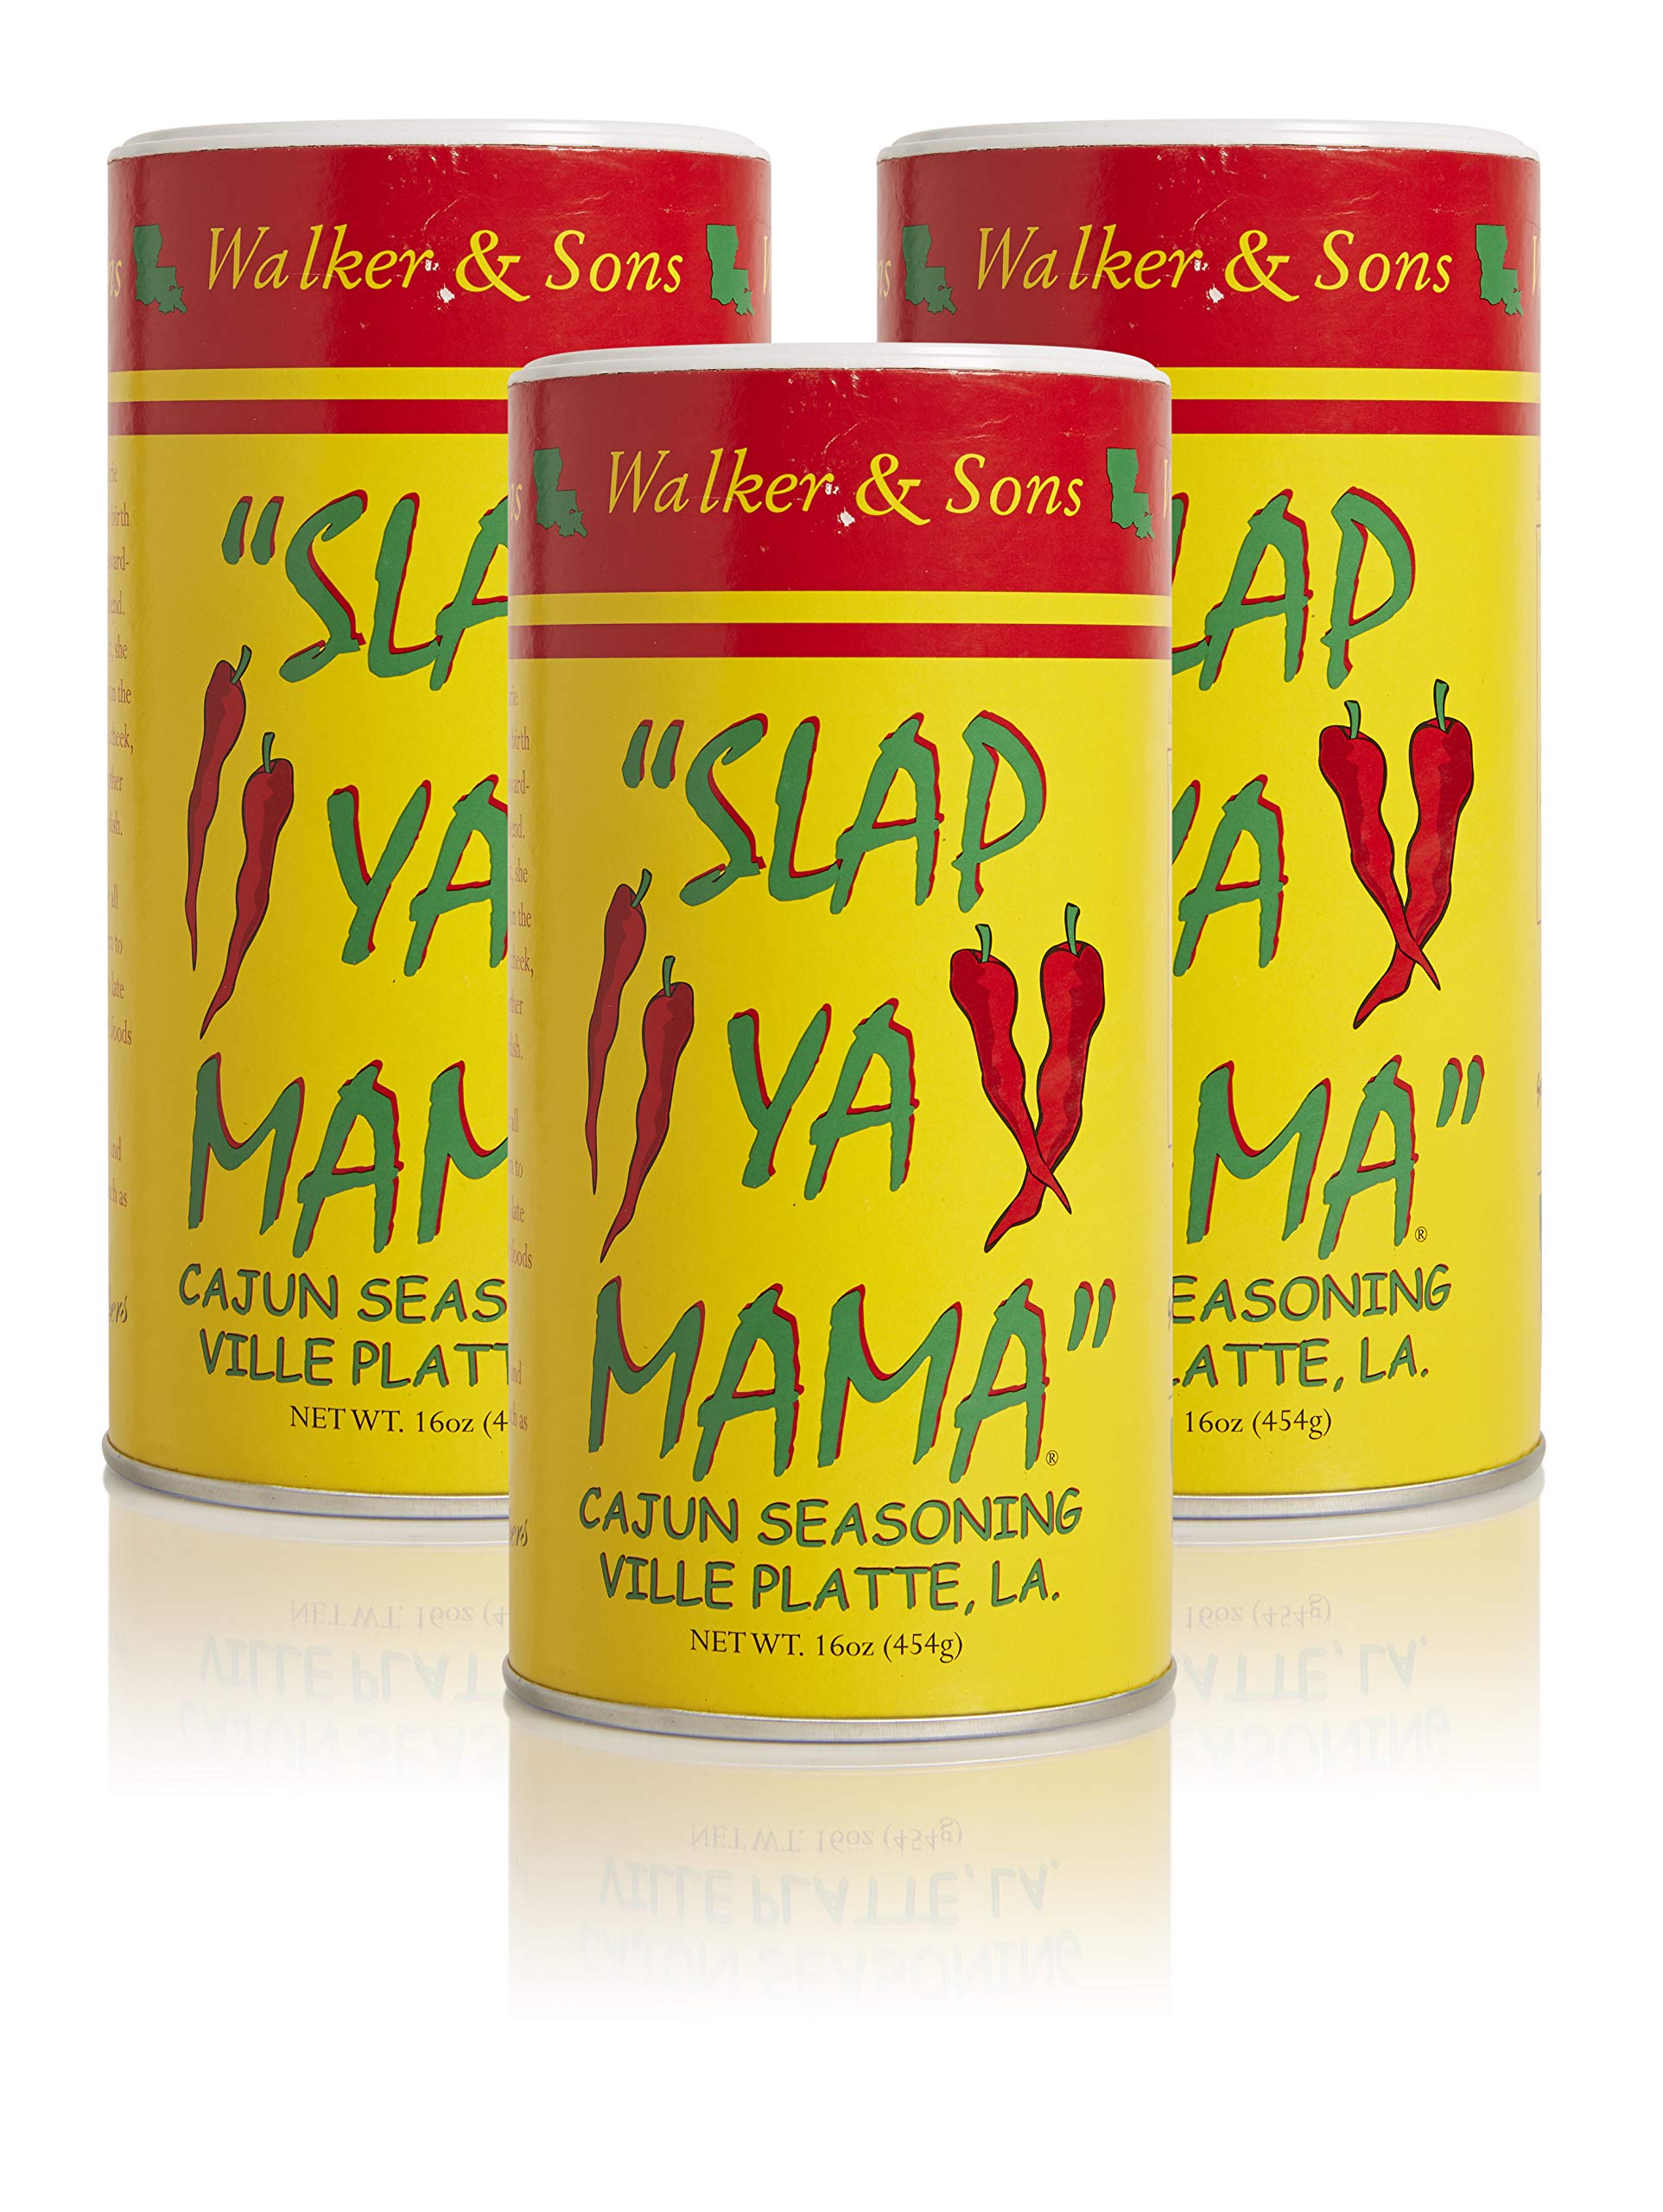 Slap Your Mama Original Cajun Seasoning, 8oz.